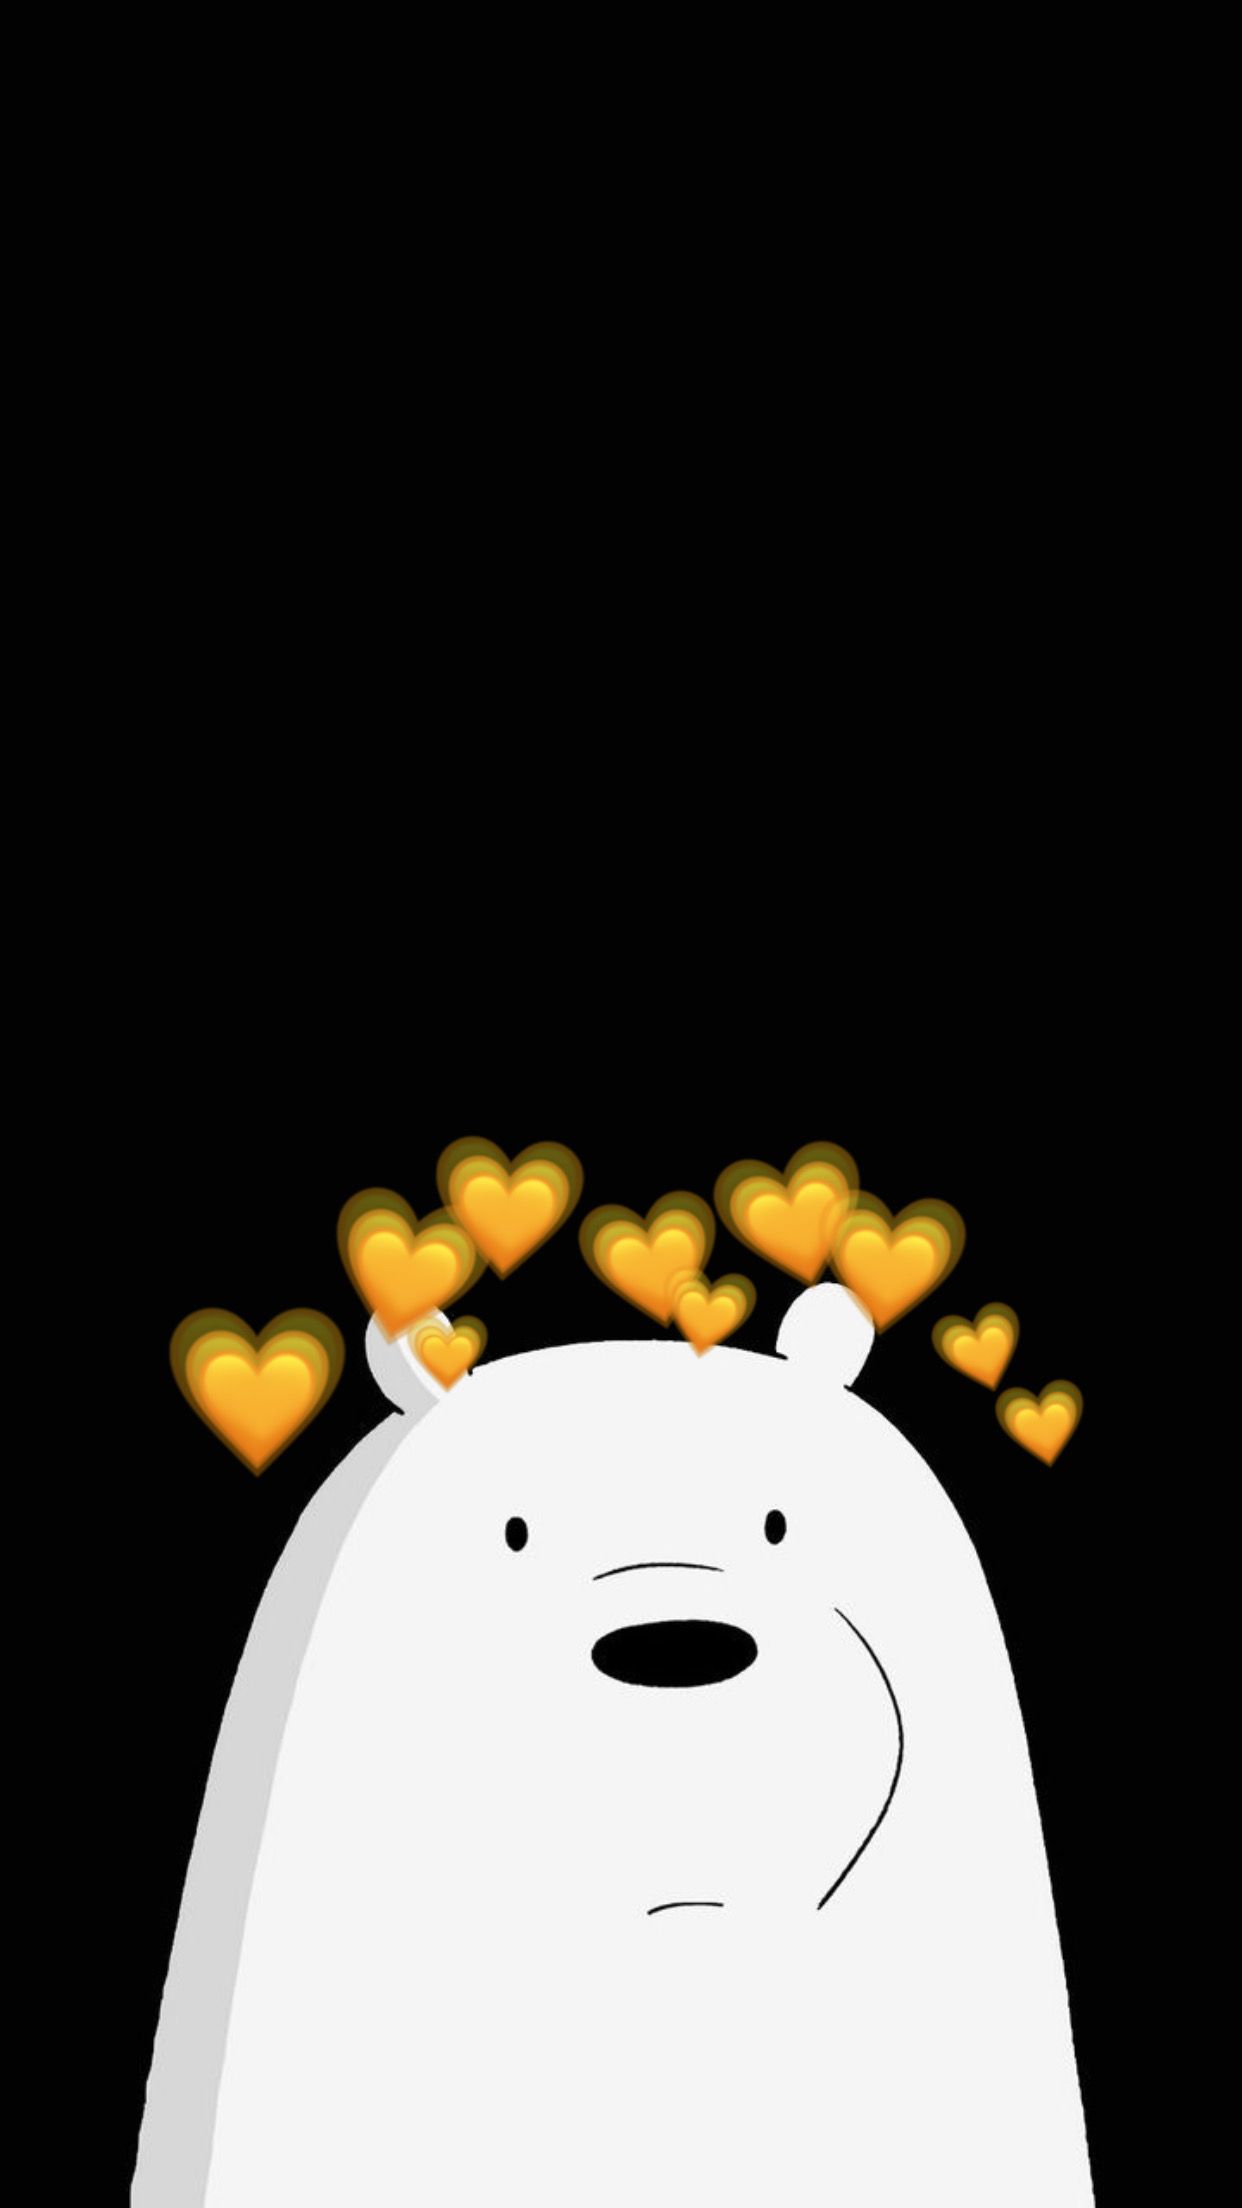 Ice Bear w/ Aesthetic Yellow Heart Crown. Anak binatang, Objek gambar, Beruang kutub